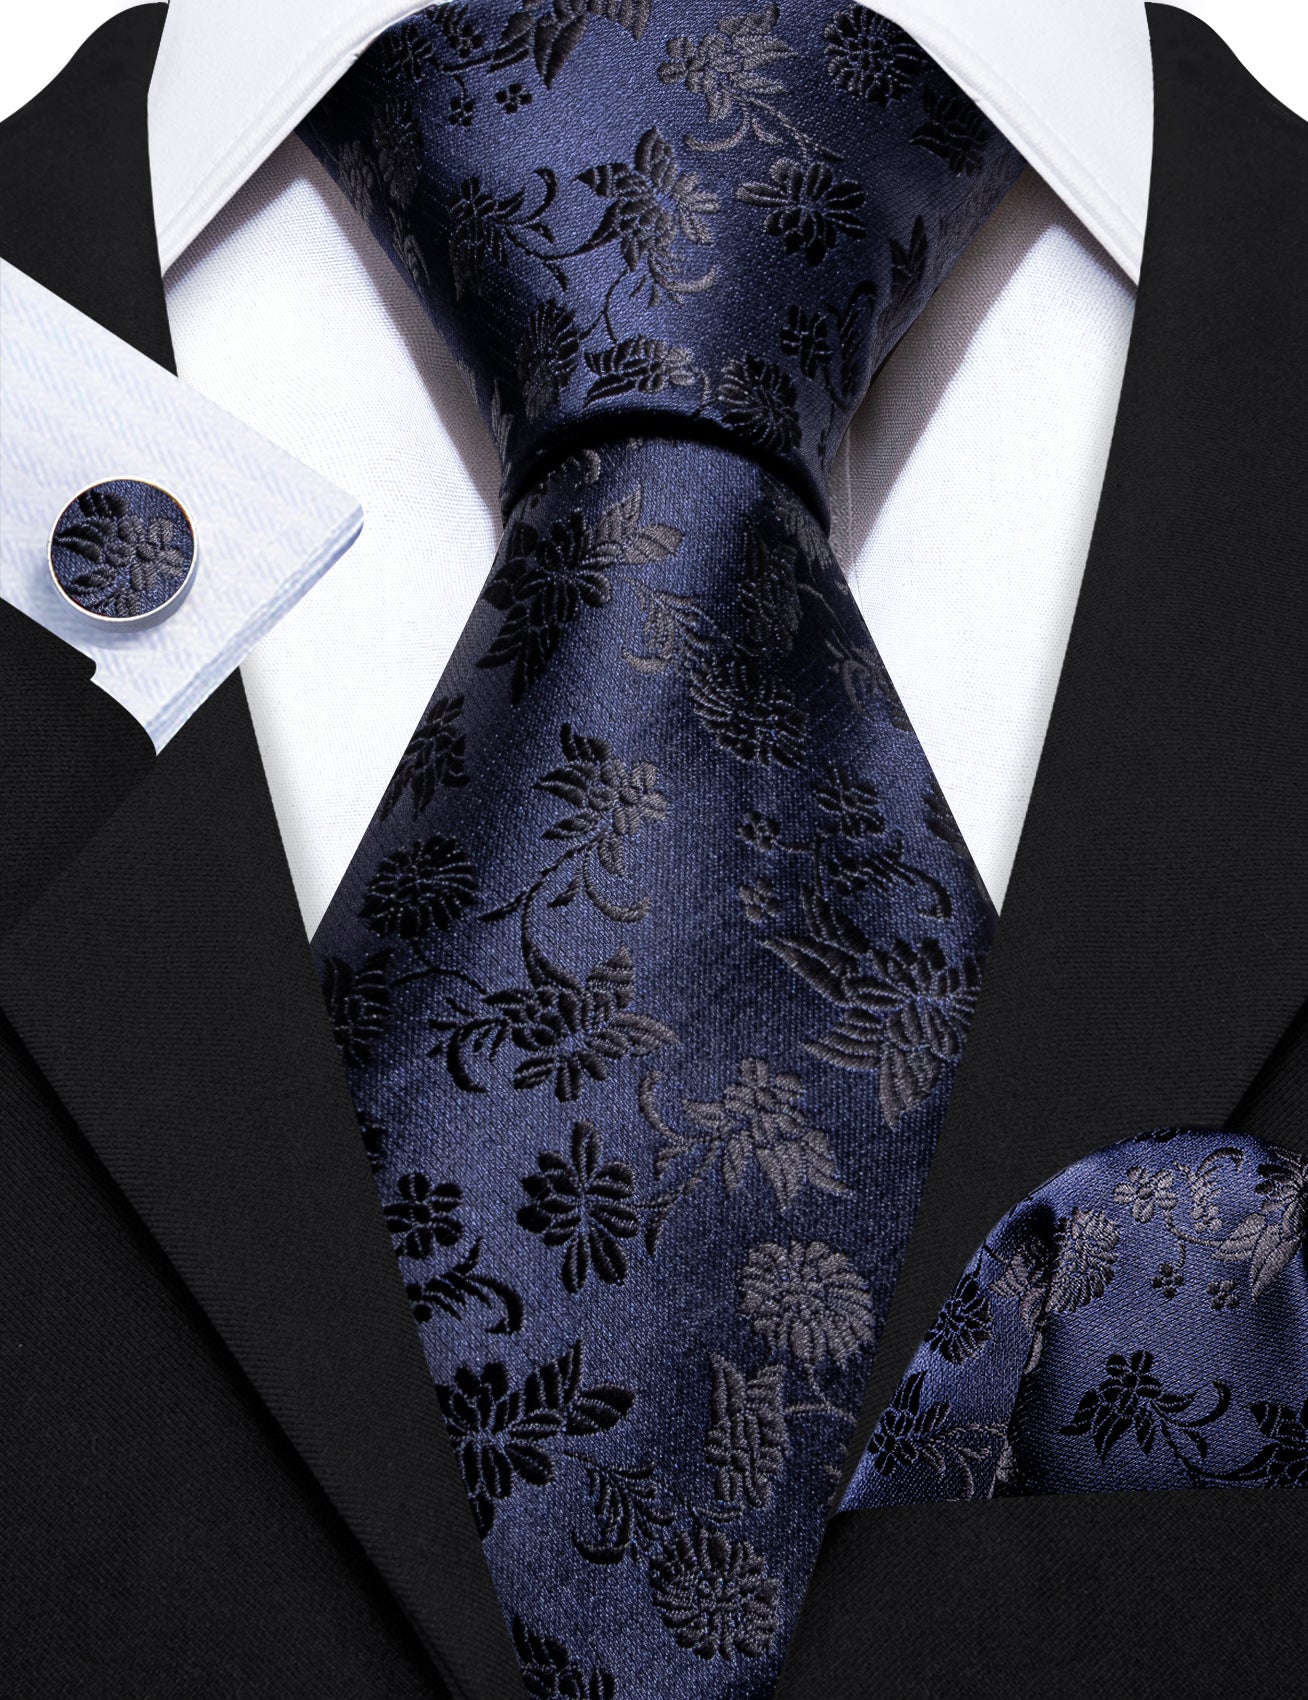 Purple Black Floral Silk Tie Handkerchief Cufflinks Set